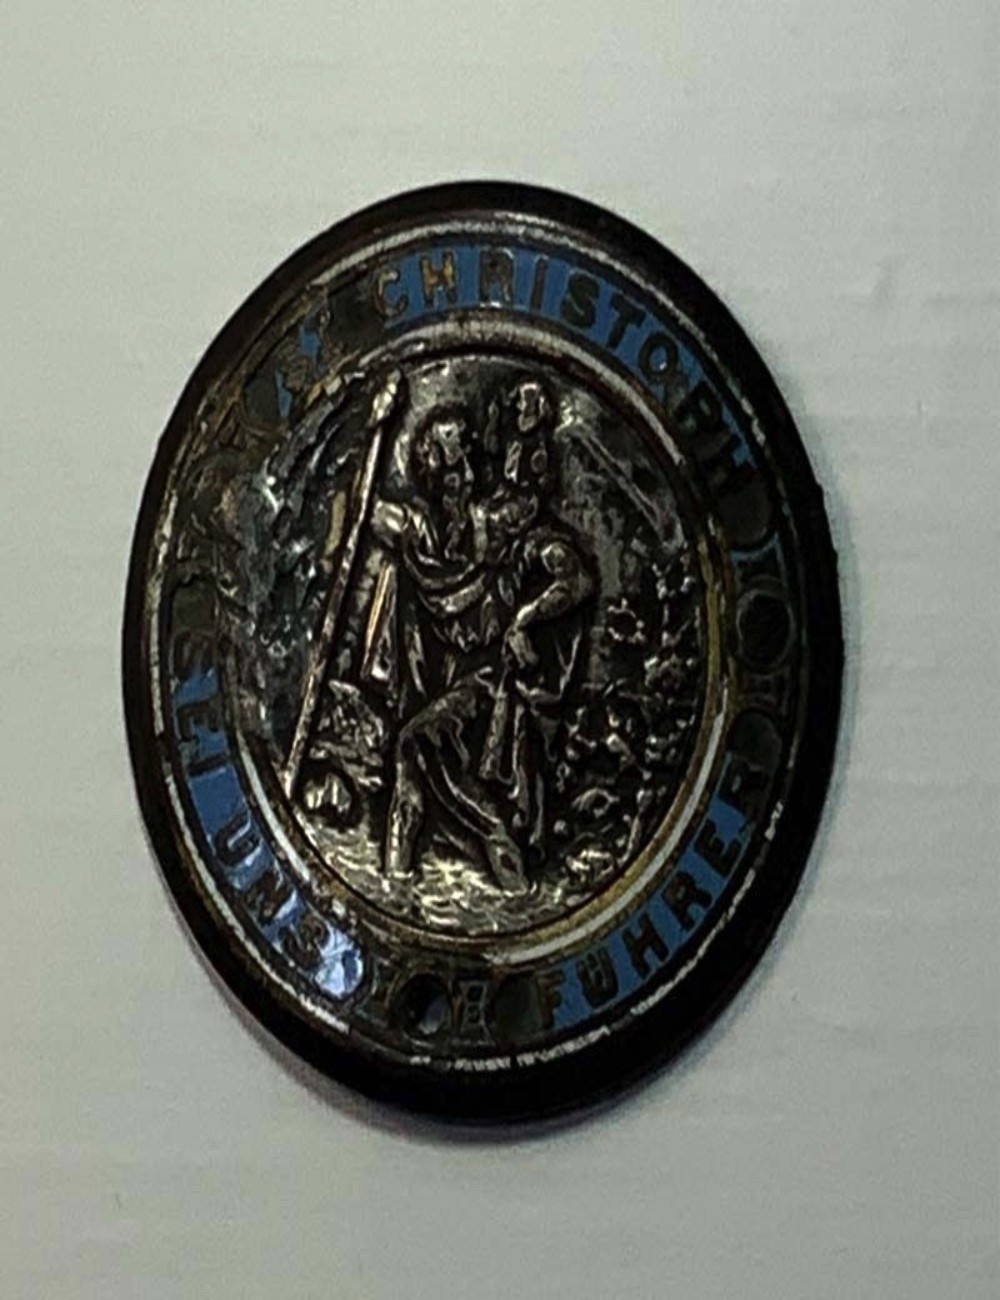 San Cristoforo plaque. Dimensions 5.6 cm x 5.6 cm